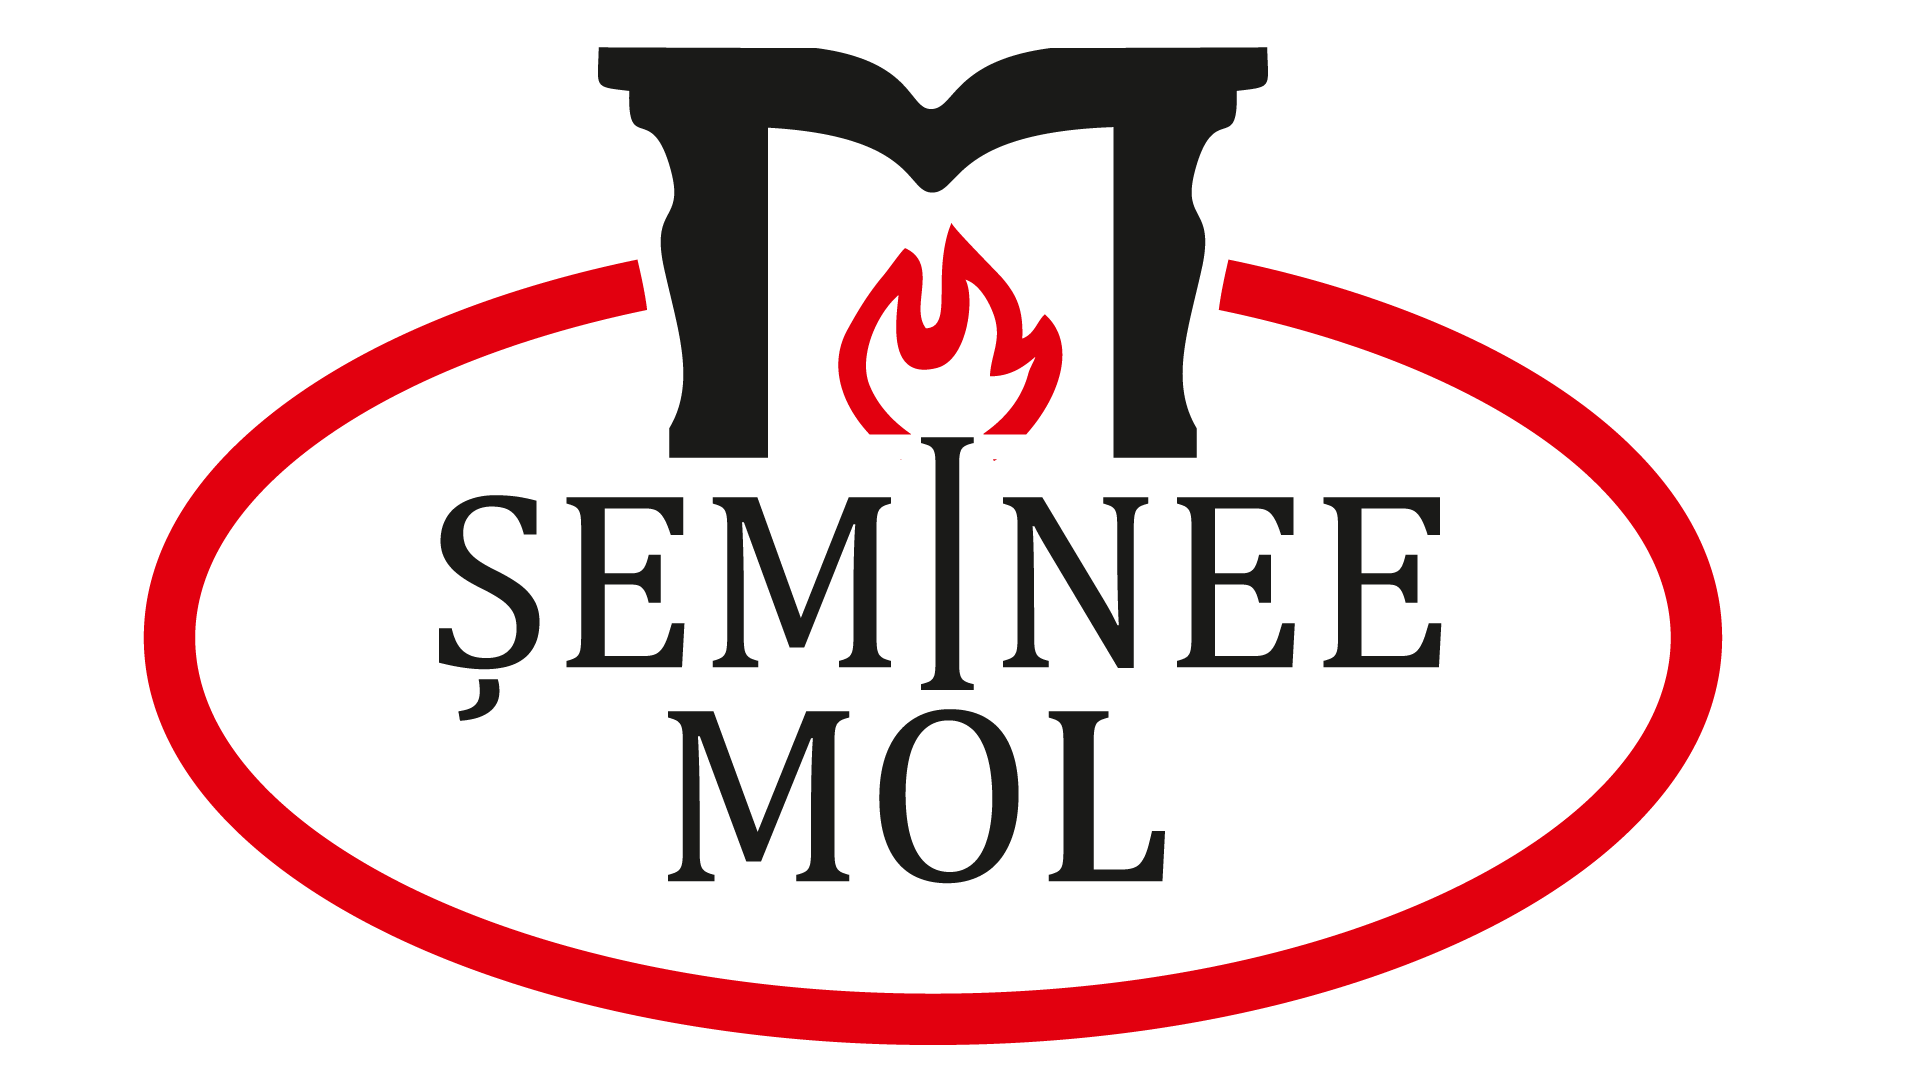 Seminee-MOL